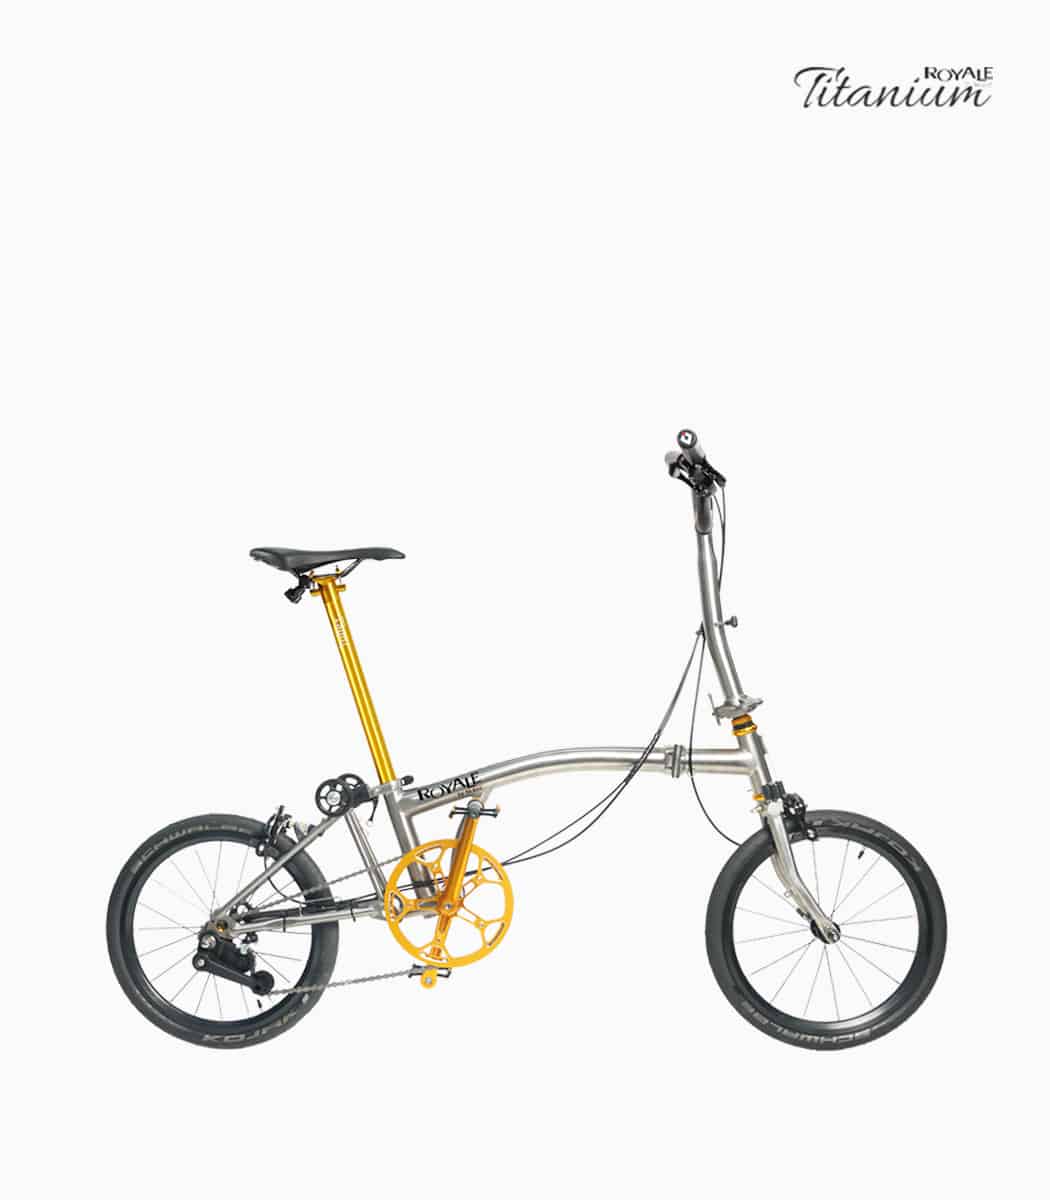 ROYALE Titanium M3 (TITANIUM SILVER) foldable bicycle right